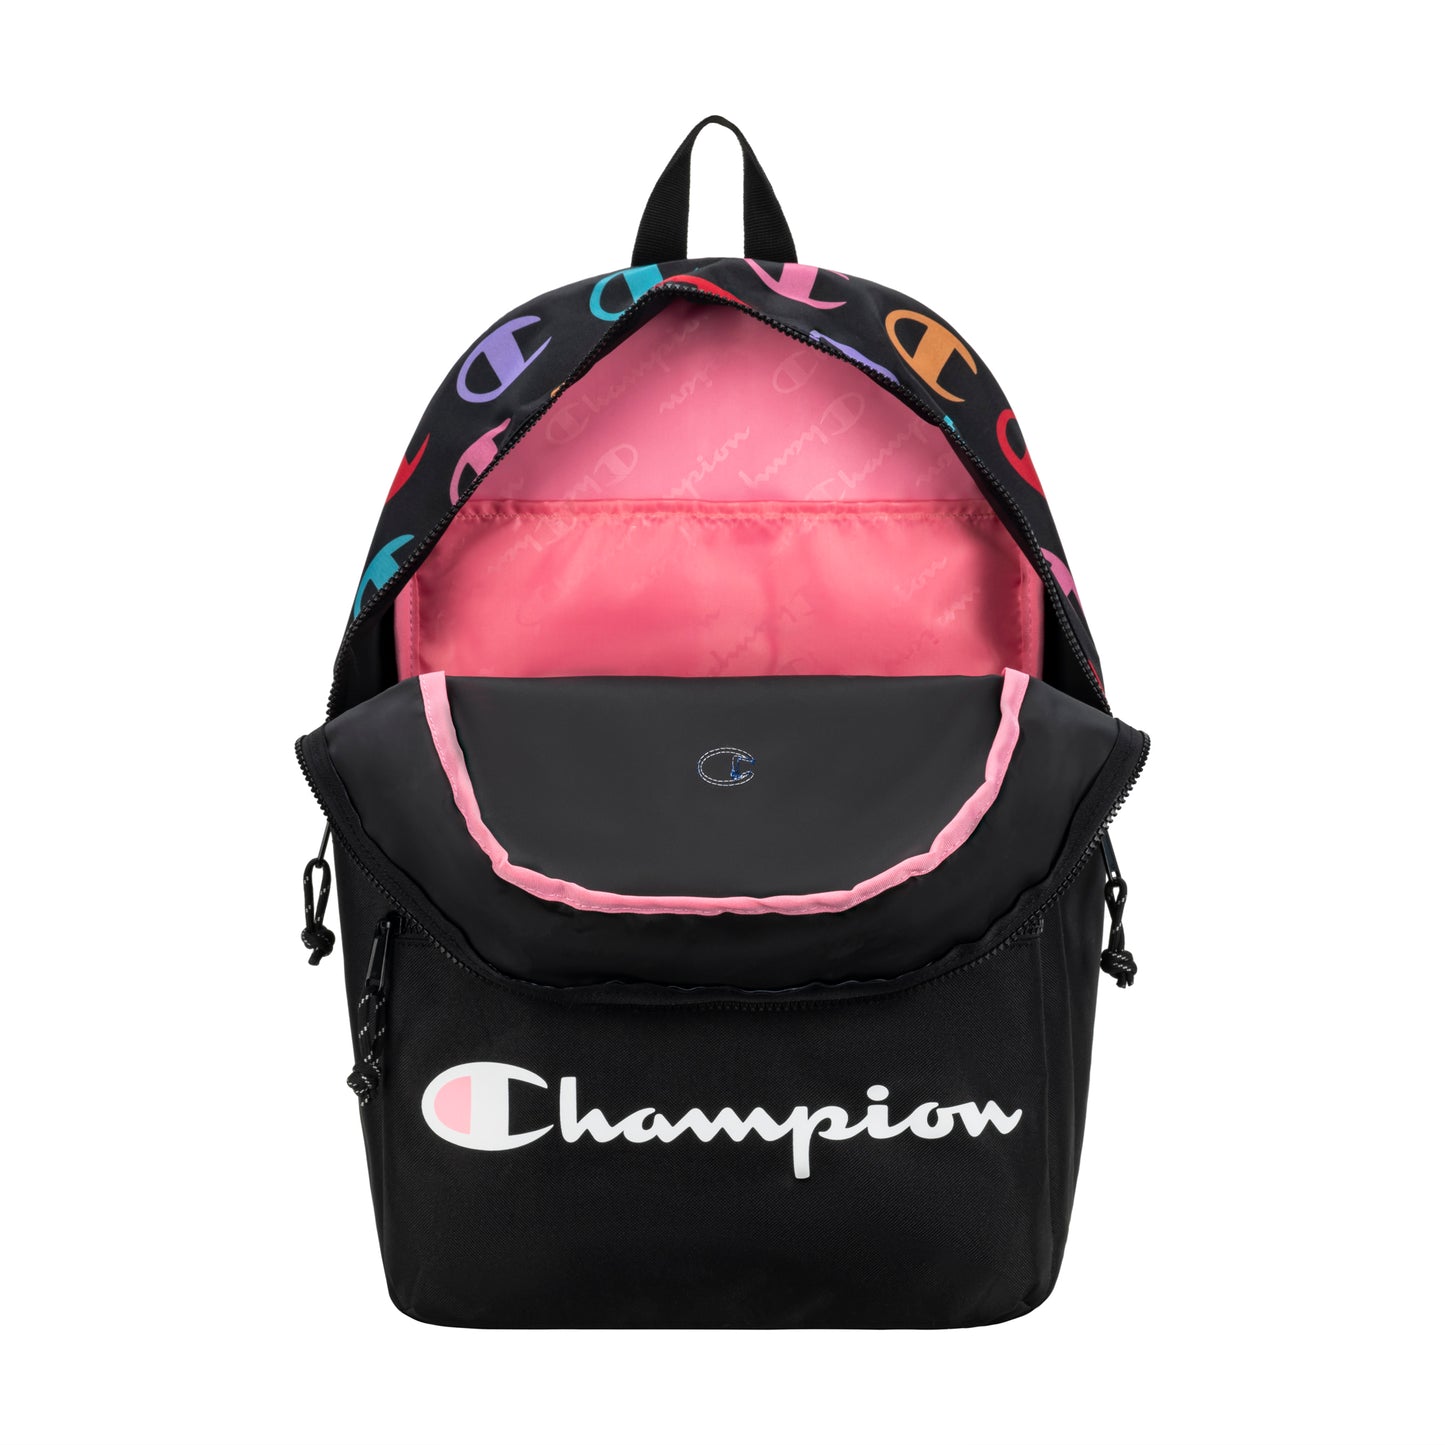 Forever Champ The Manuscript Backpack